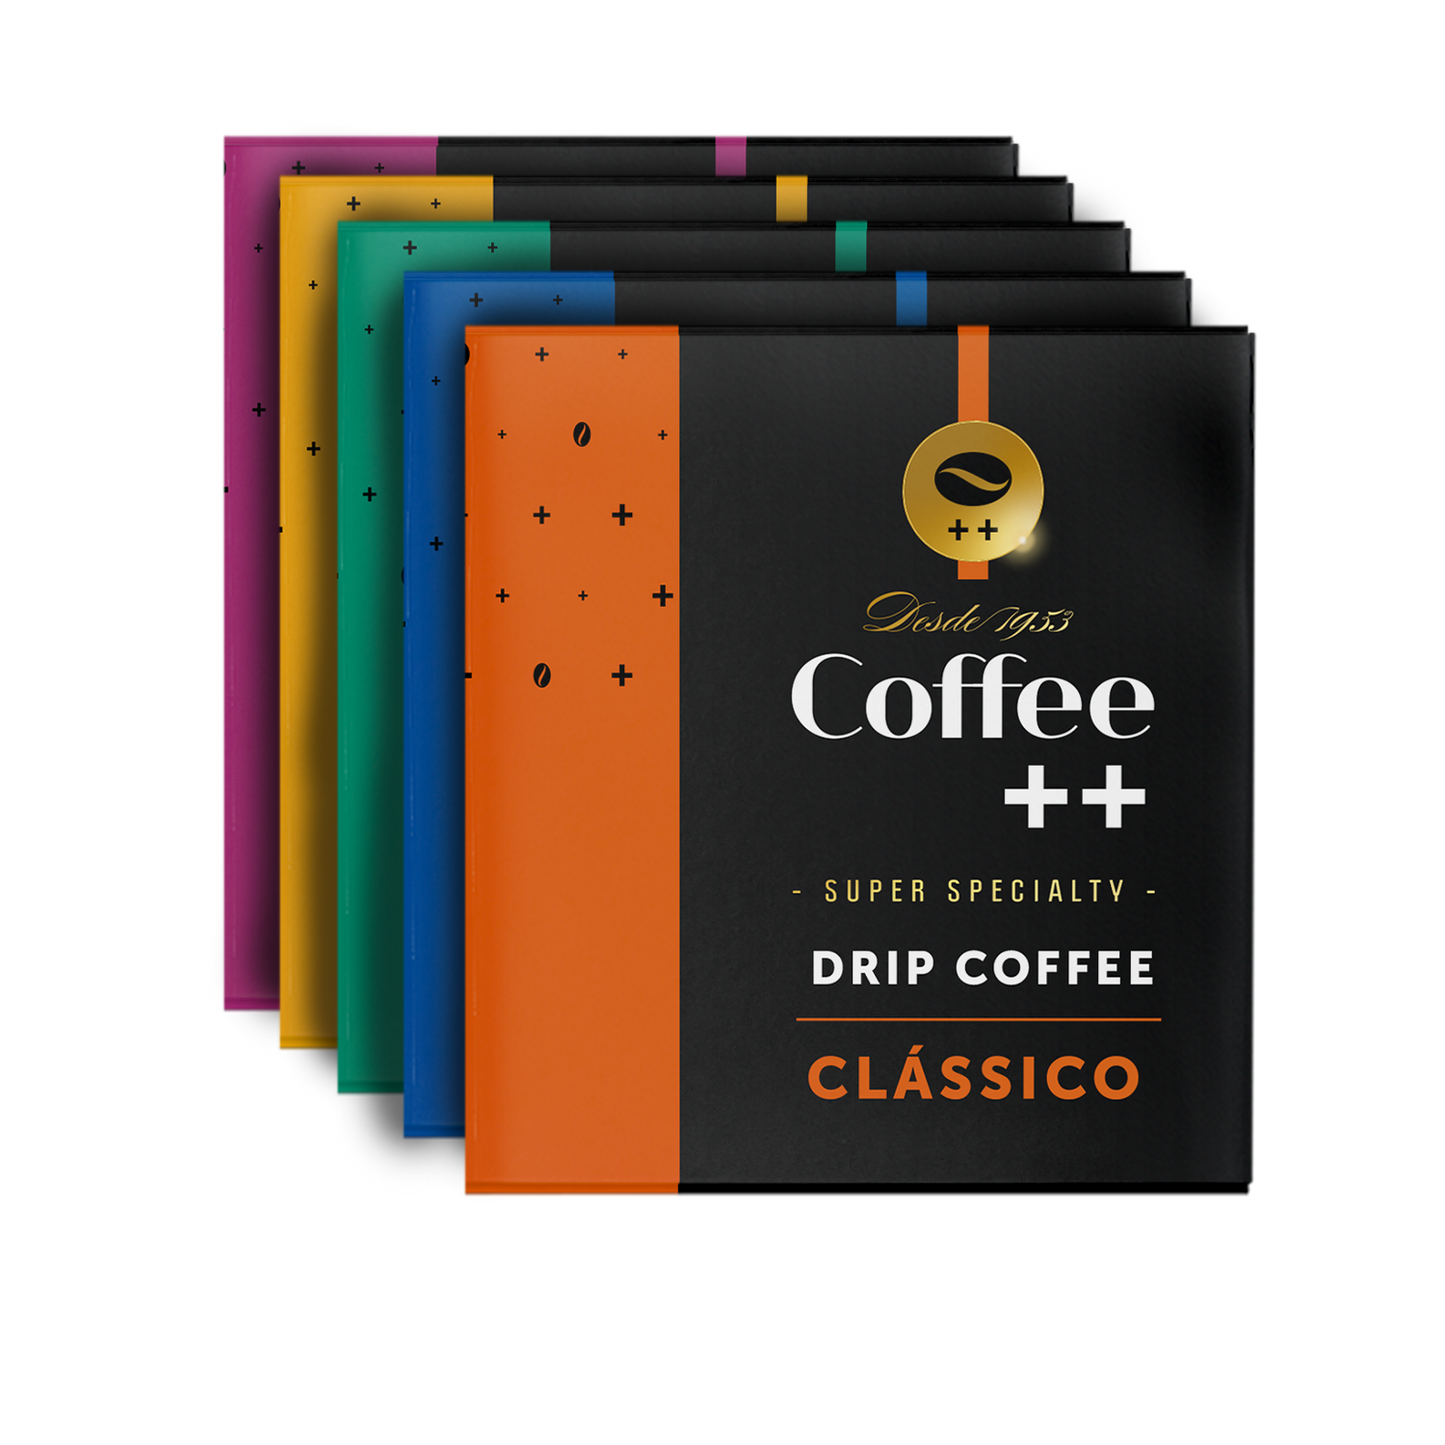 Kit Drip Coffee - Completo (Família + Clássico + Geisha + Arara)